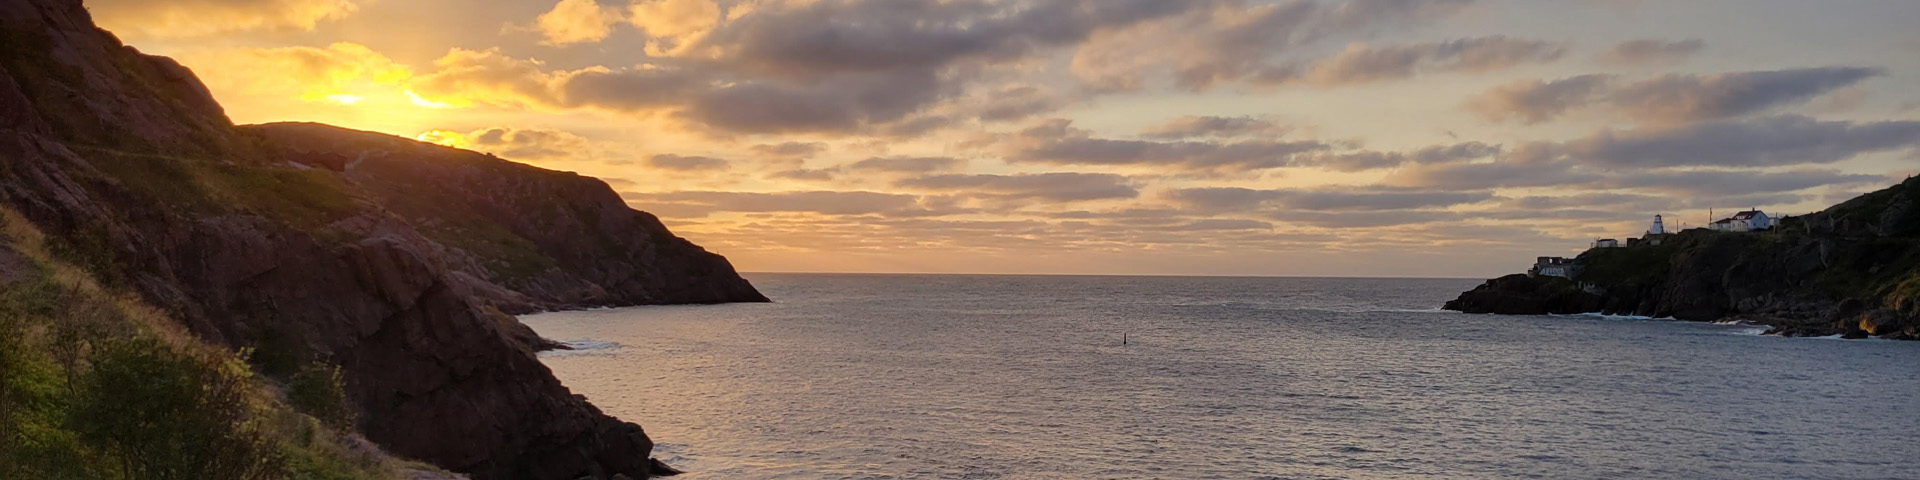 the sun rising over a coastal cliff